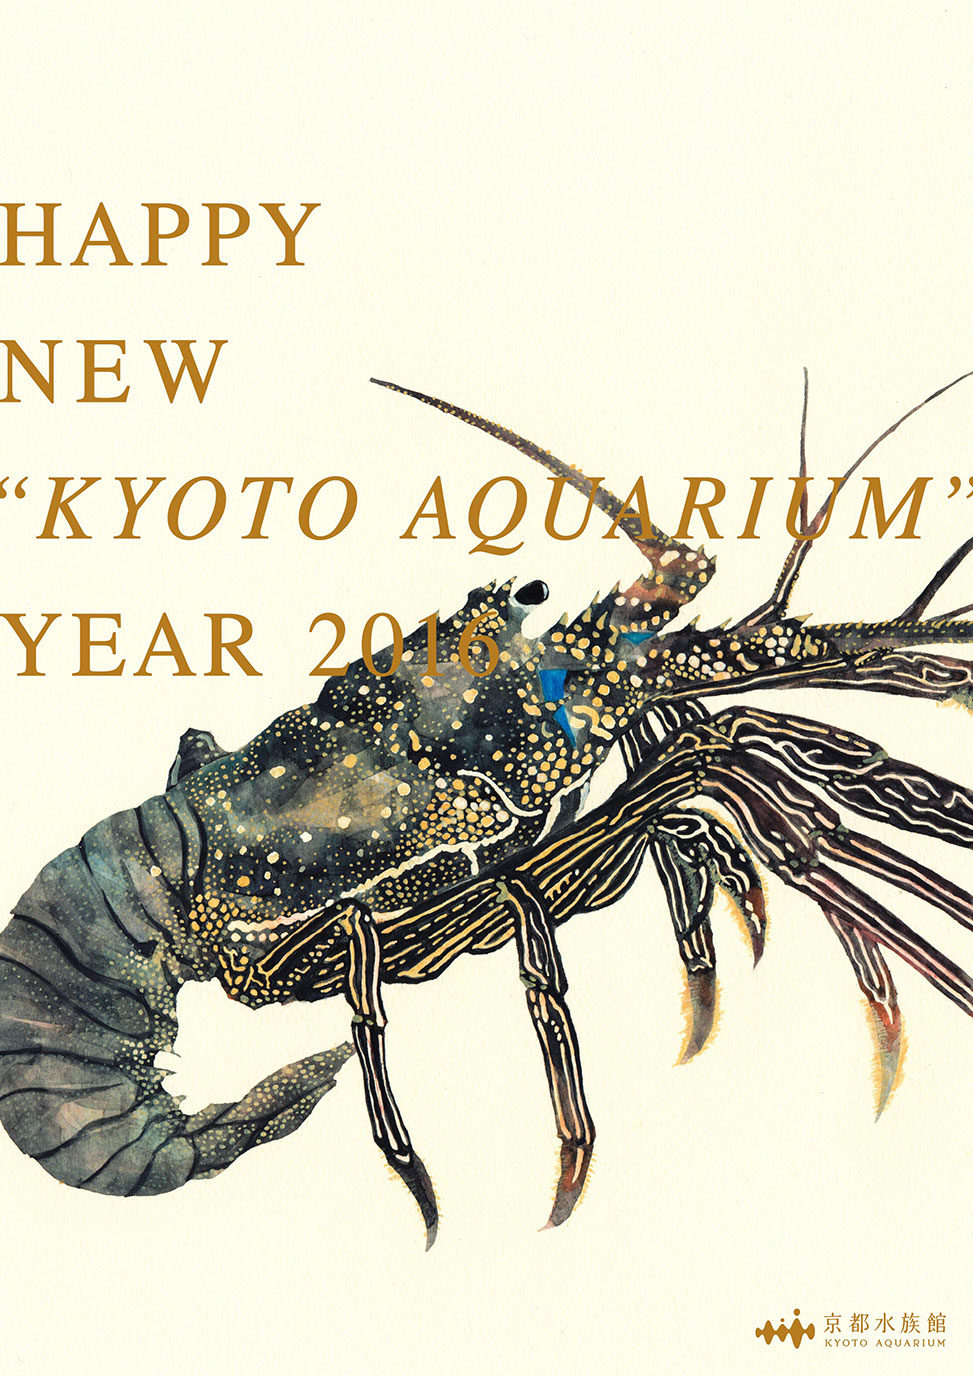 HAPPY NEW “KYOTO AQUARIUM” YEAR